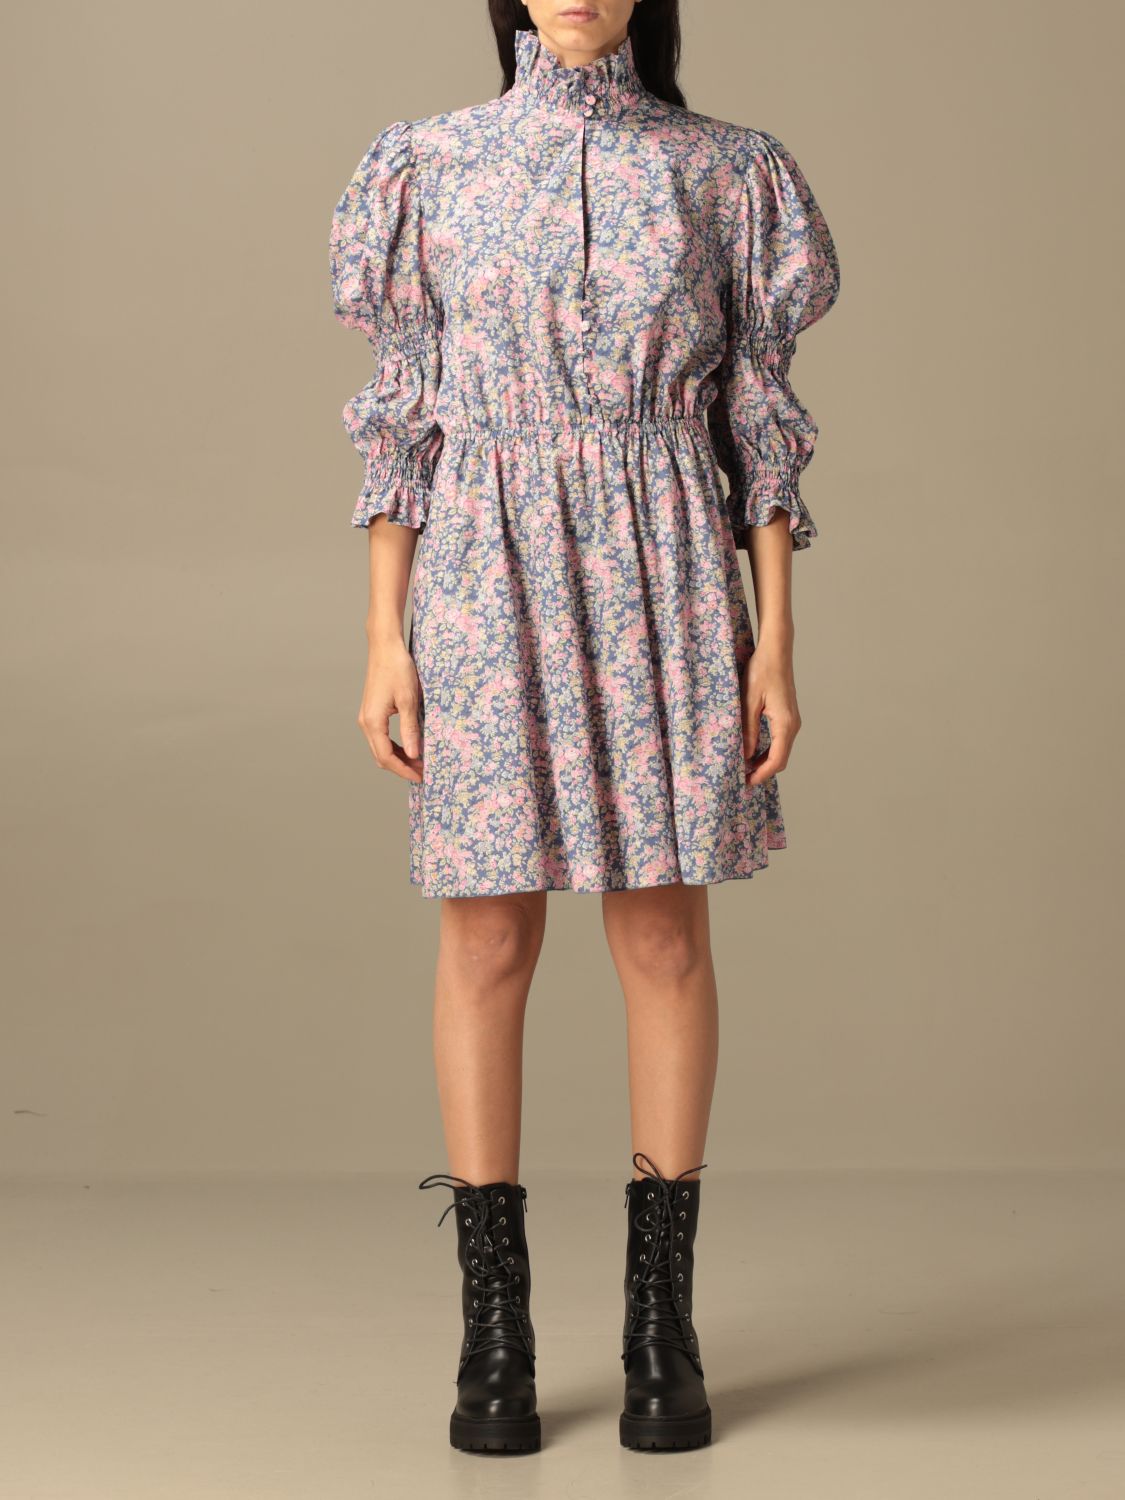 PHILOSOPHY DI LORENZO SERAFINI: short dress with floral pattern | Dress ...